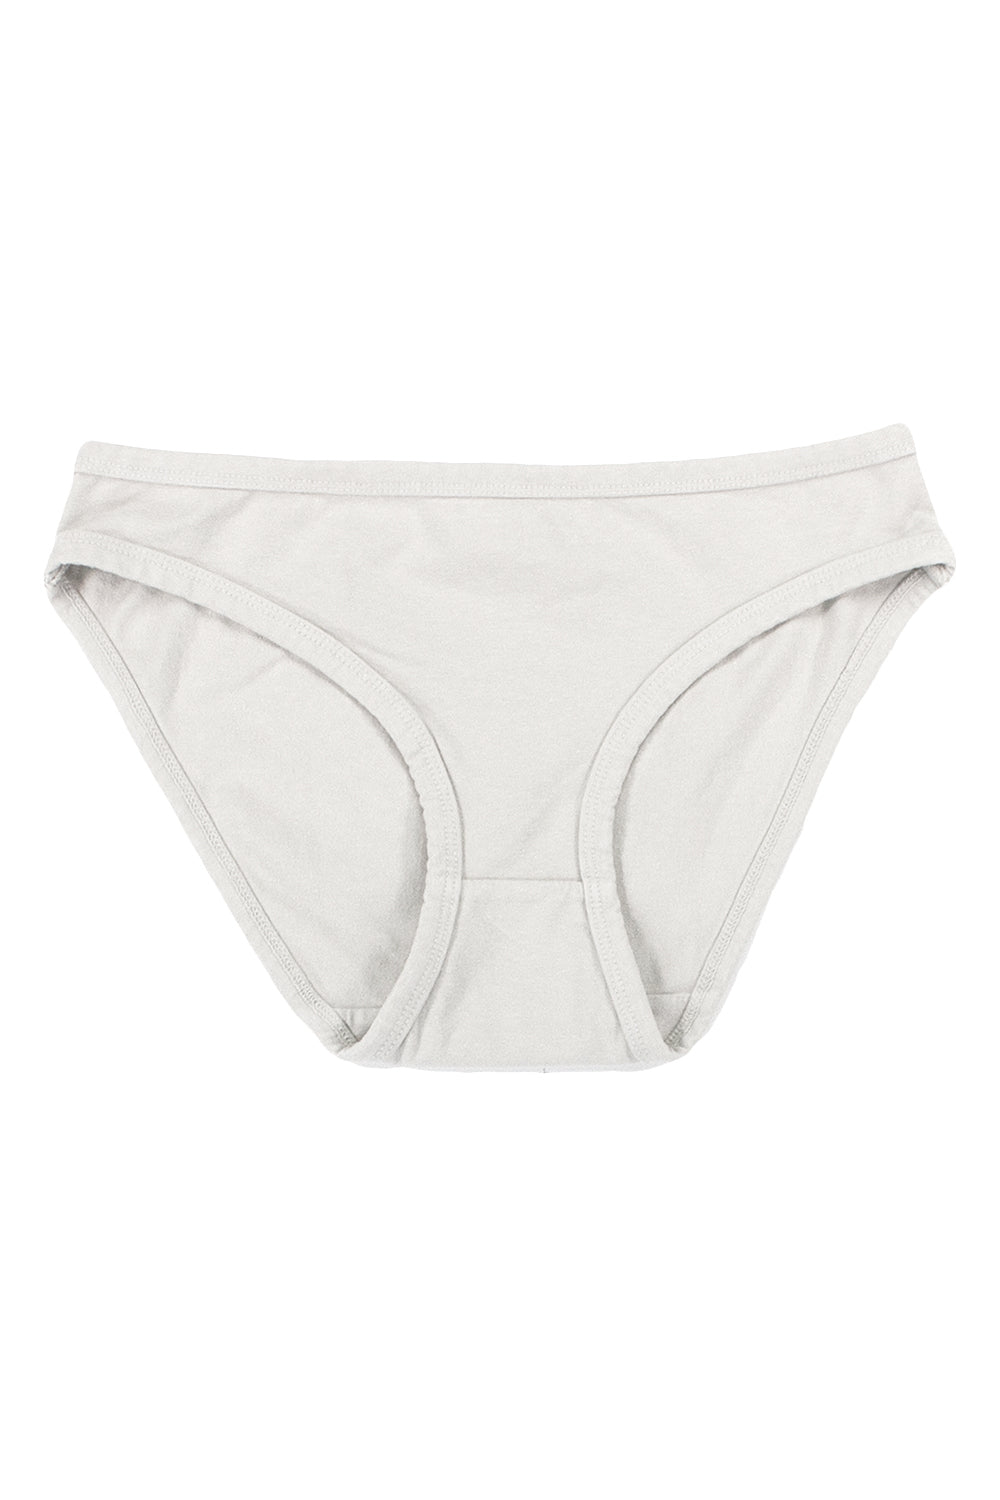 Bikini Brief | Jungmaven Hemp Clothing & Accessories / Color: Washed White